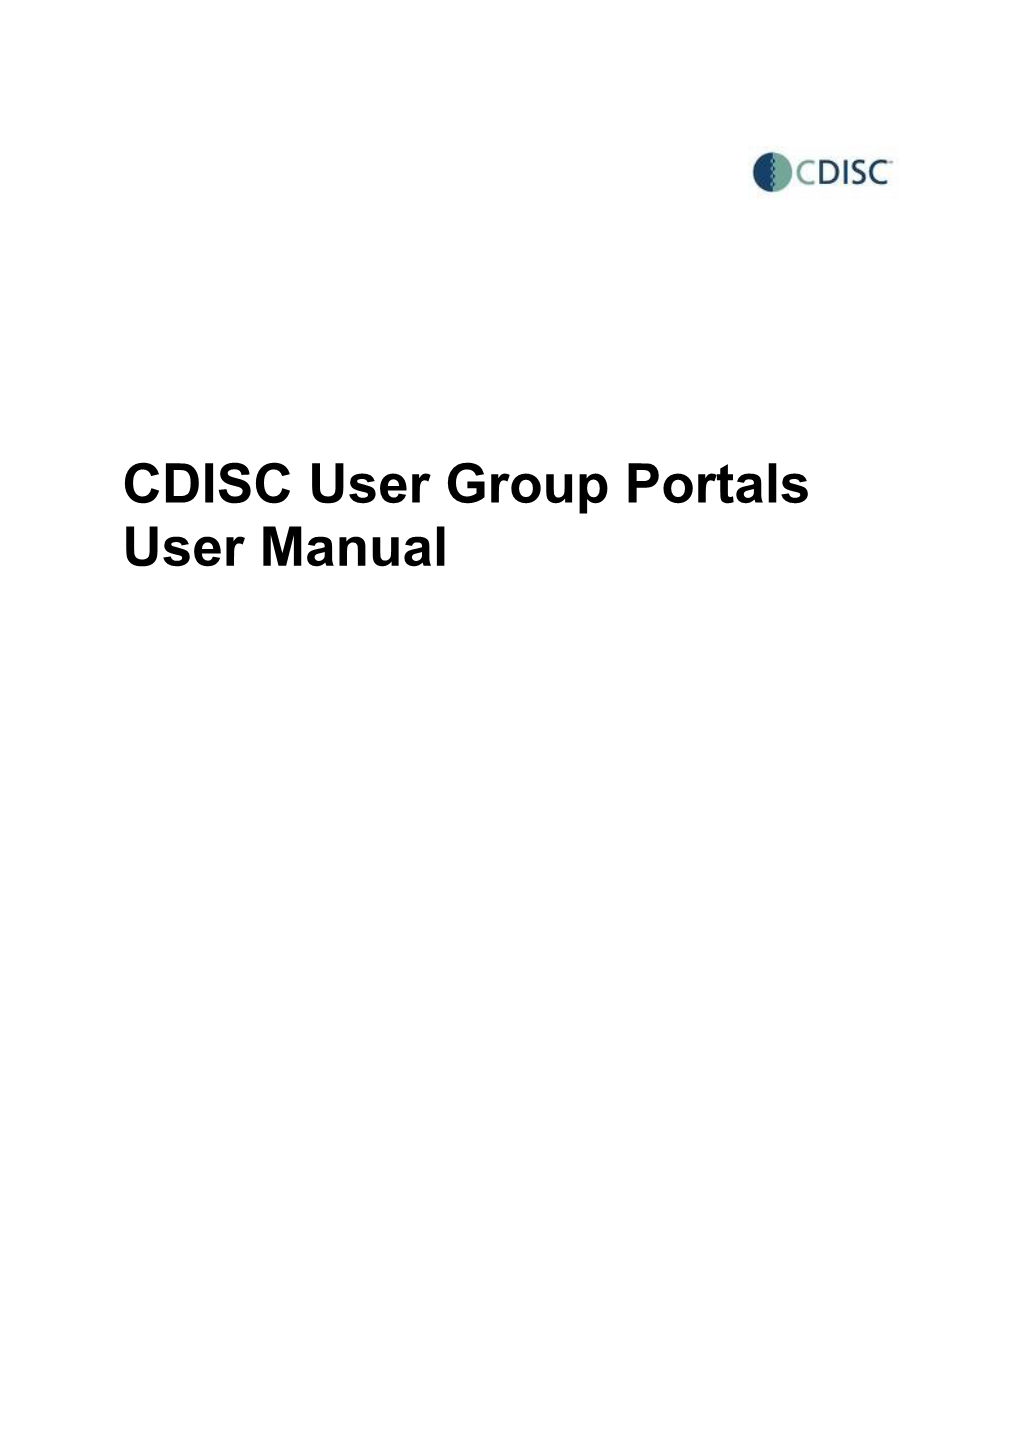 CDISC User Group Portals User Manual